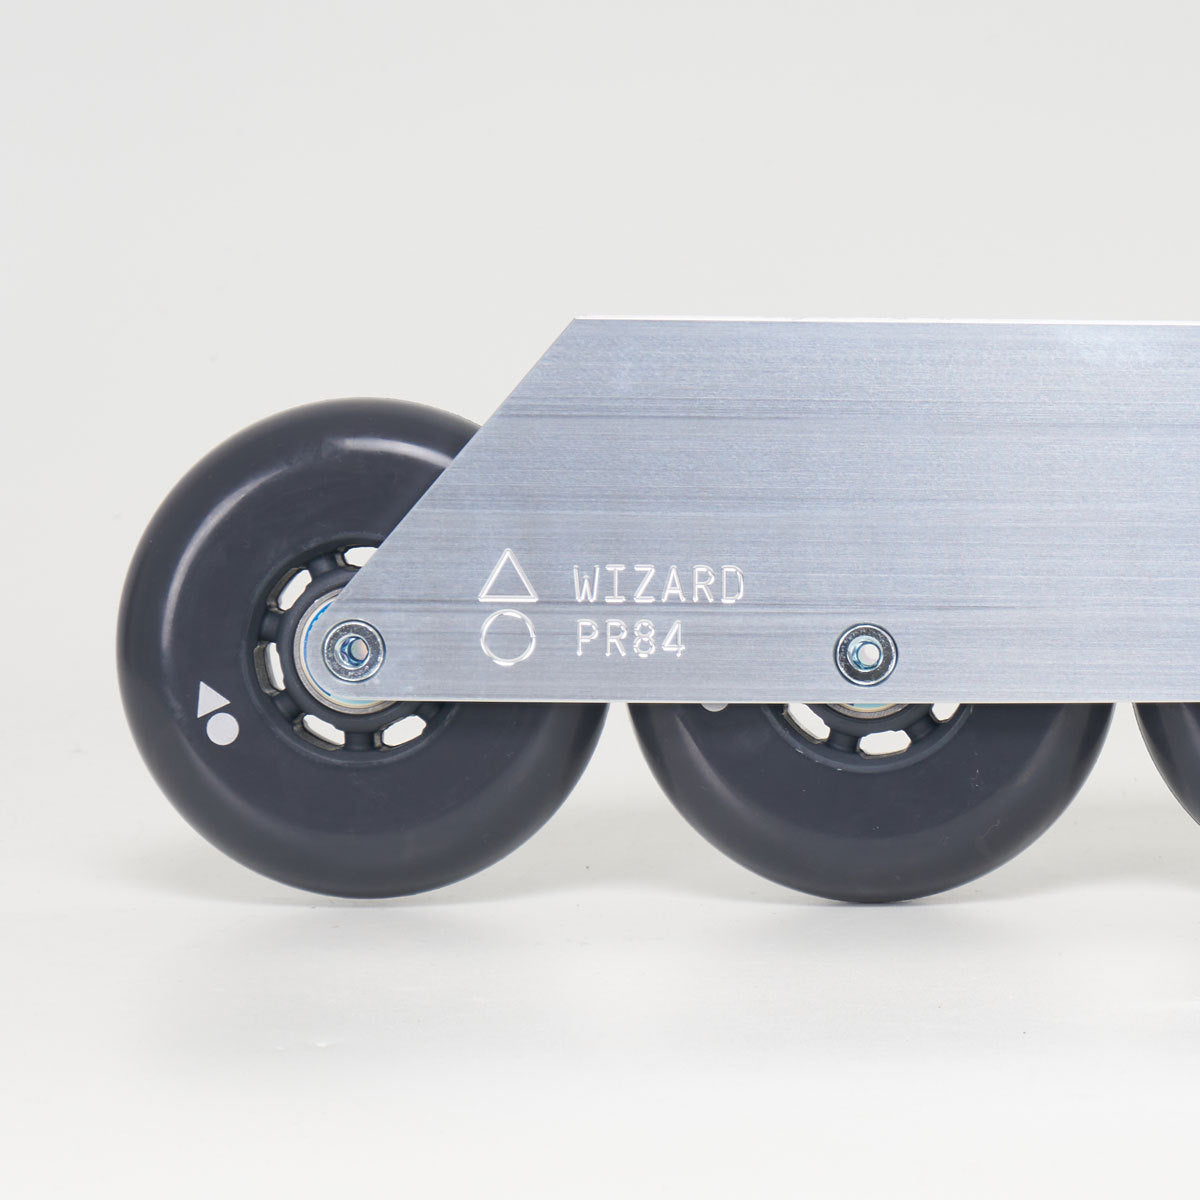 Wizard PR84 - Complete Wheel/Frame Set